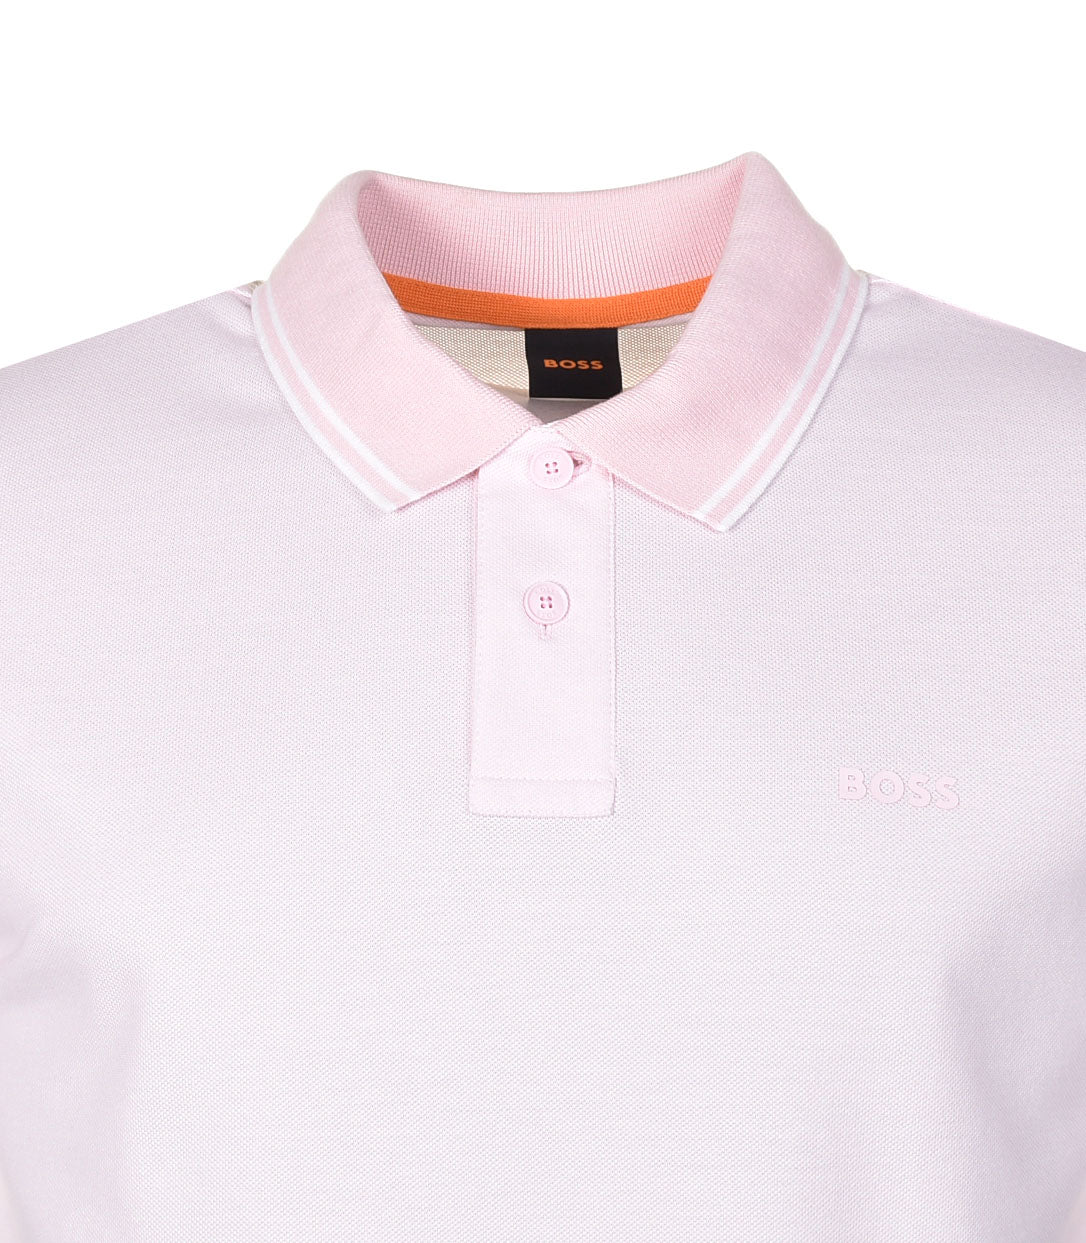 PeOxford Short Sleeve Polo Shirt 682 Light Pastel Pink